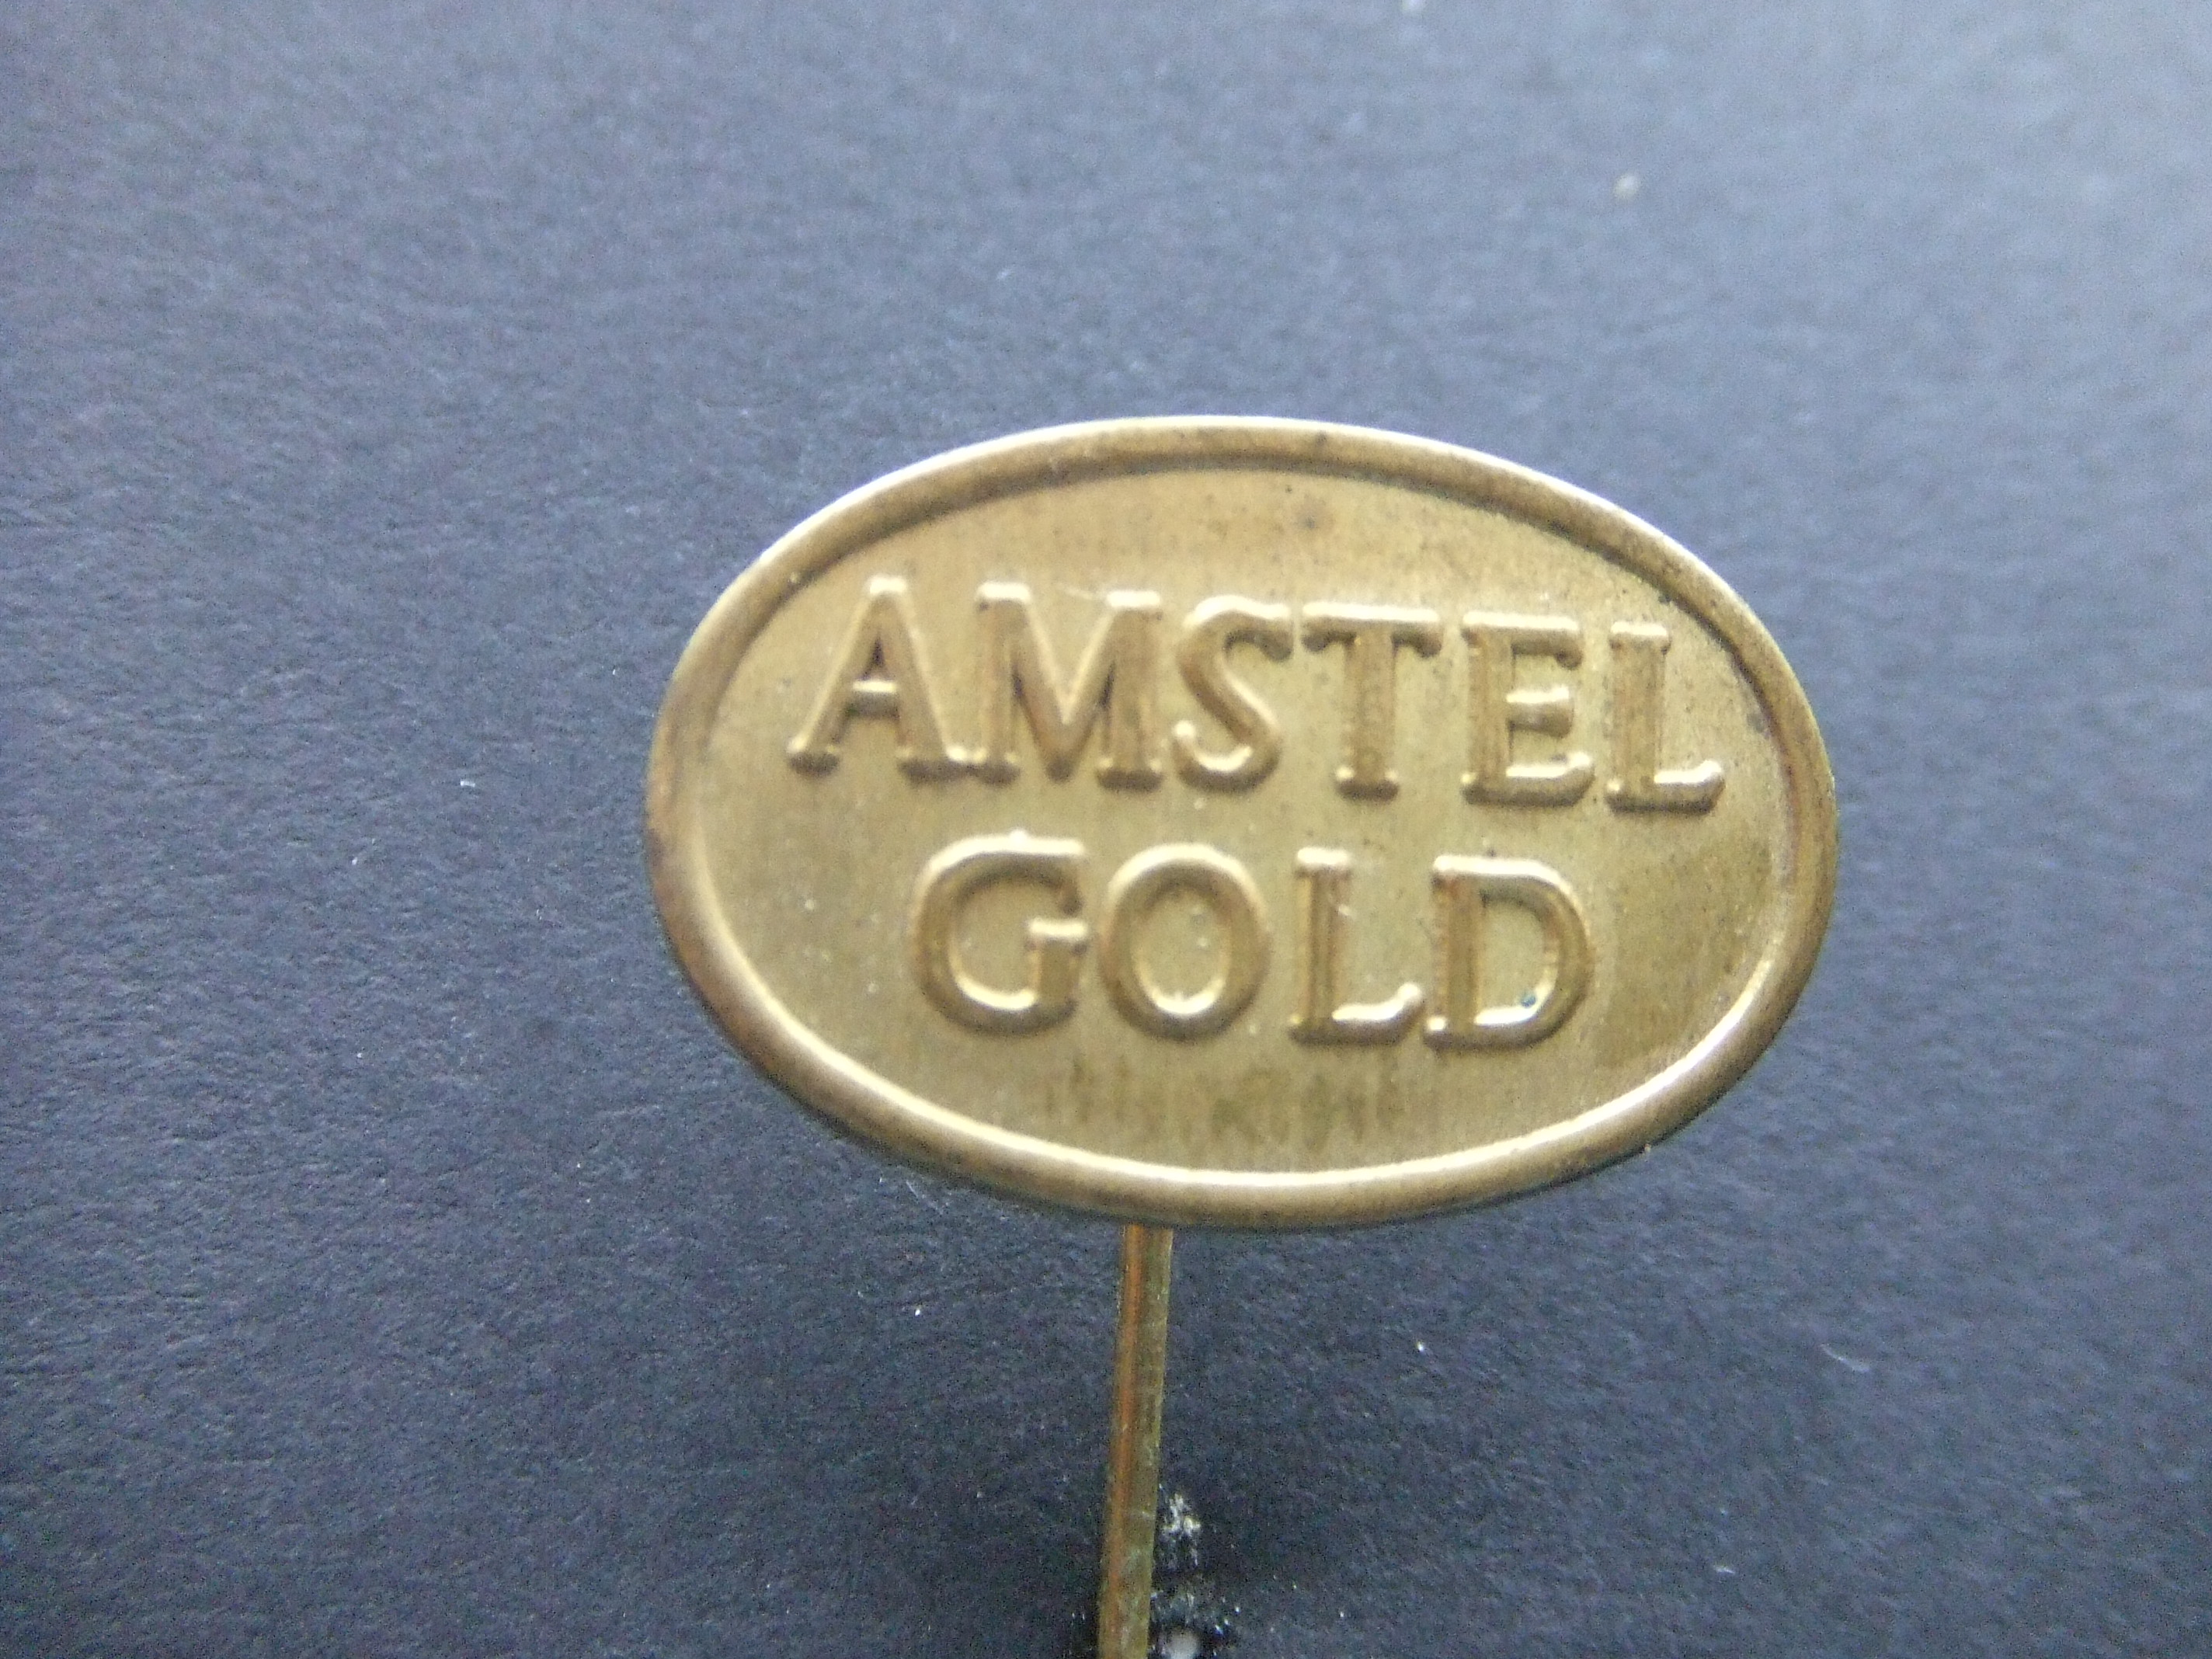 Amstel gold bier, goudkleurig logo